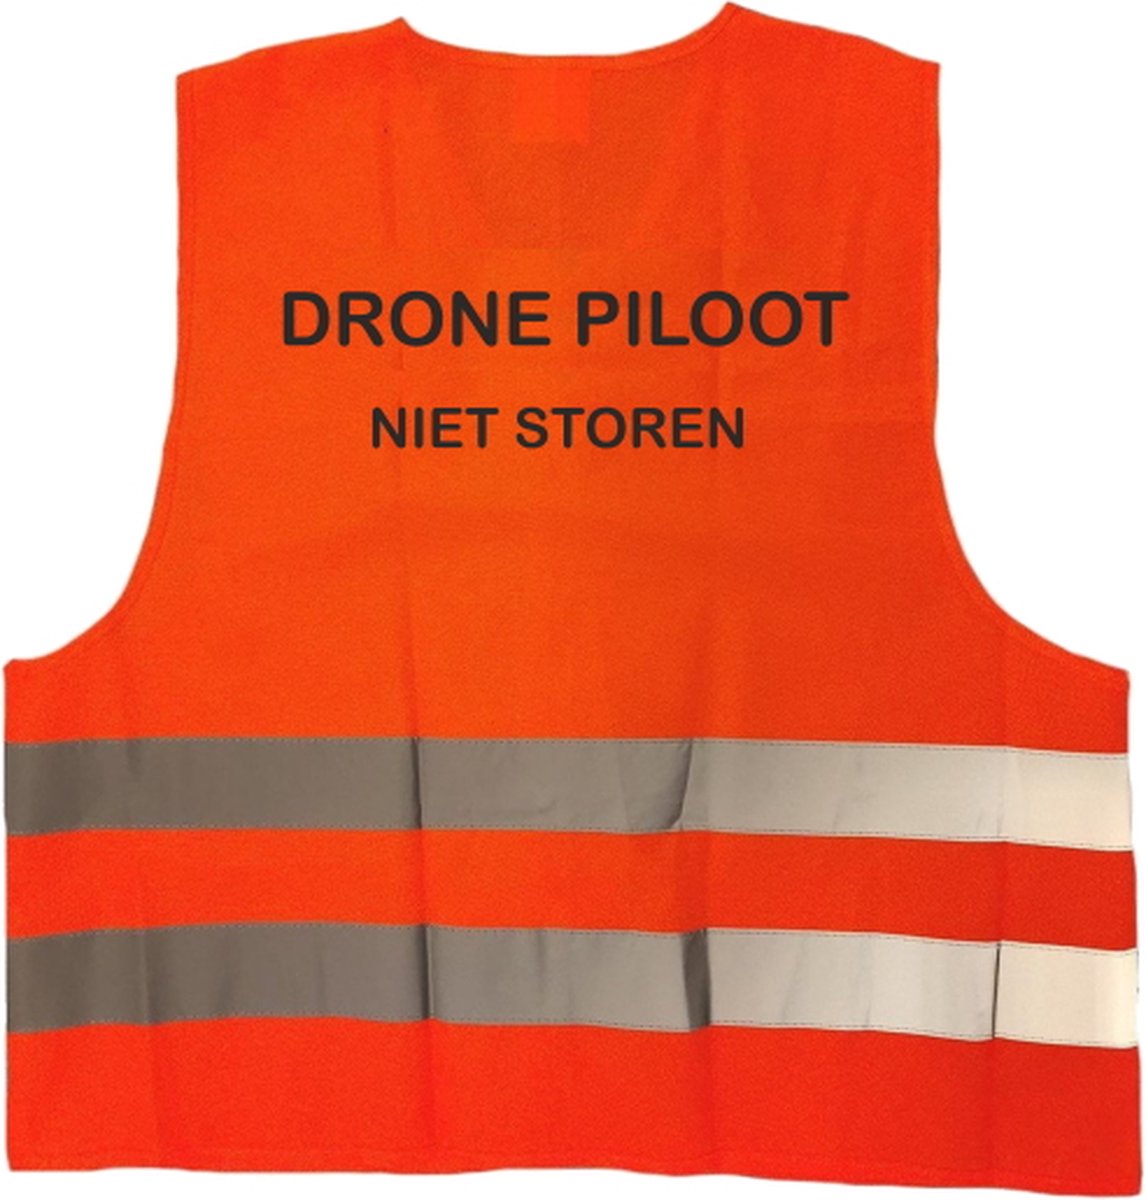 Hesje drone piloot oranje